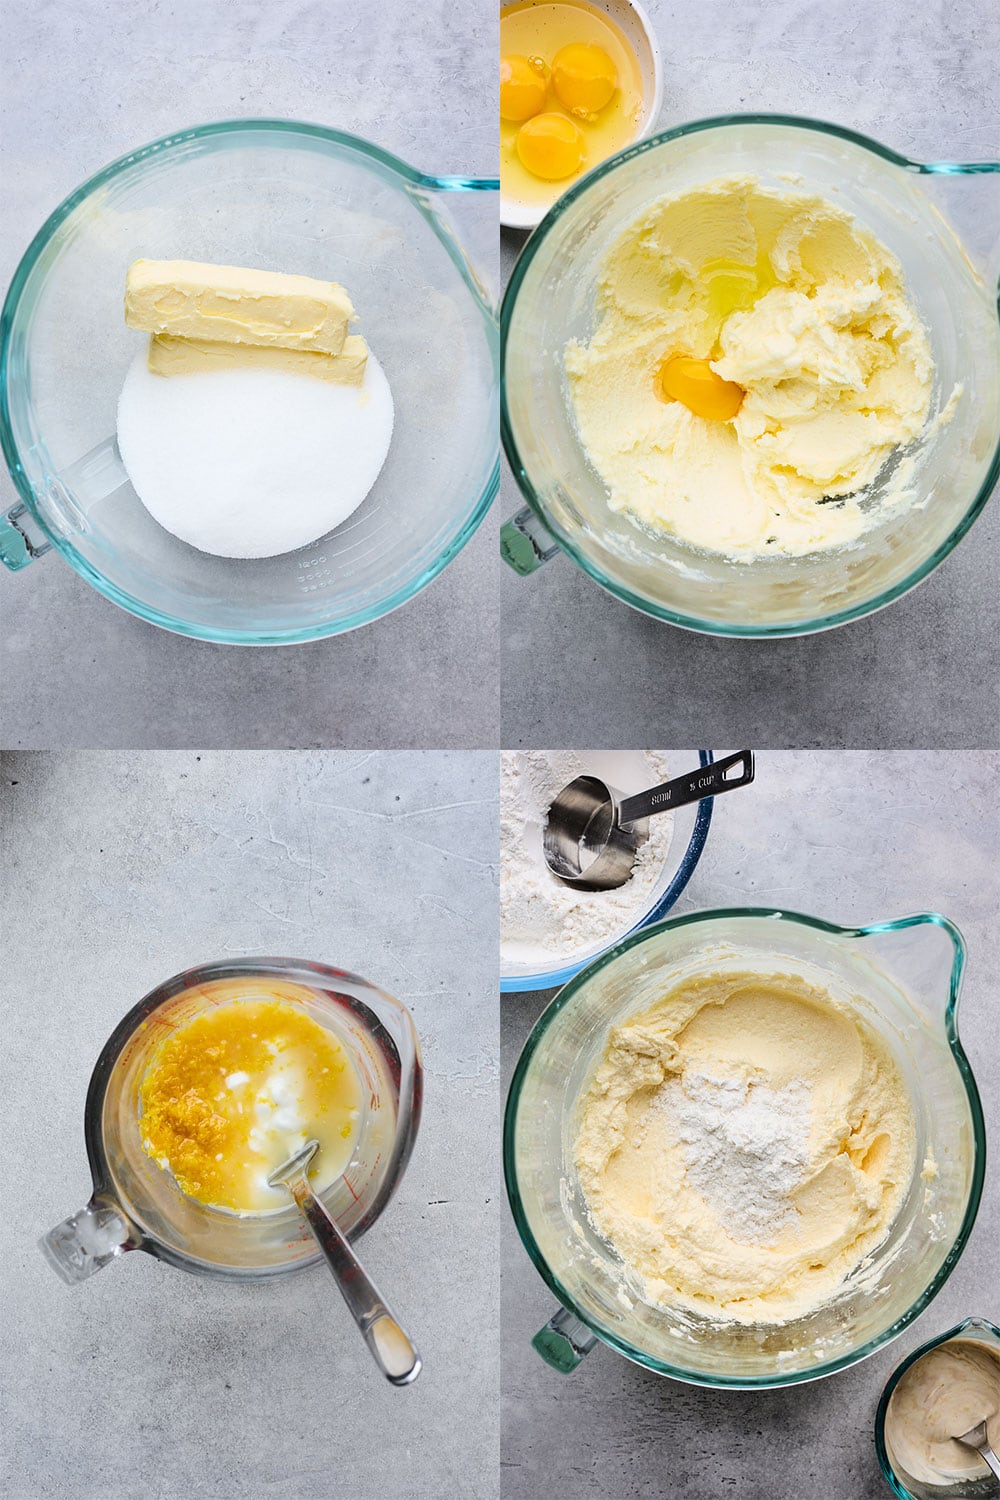 Lemon Pound Cake Step By Step Instructions part 1